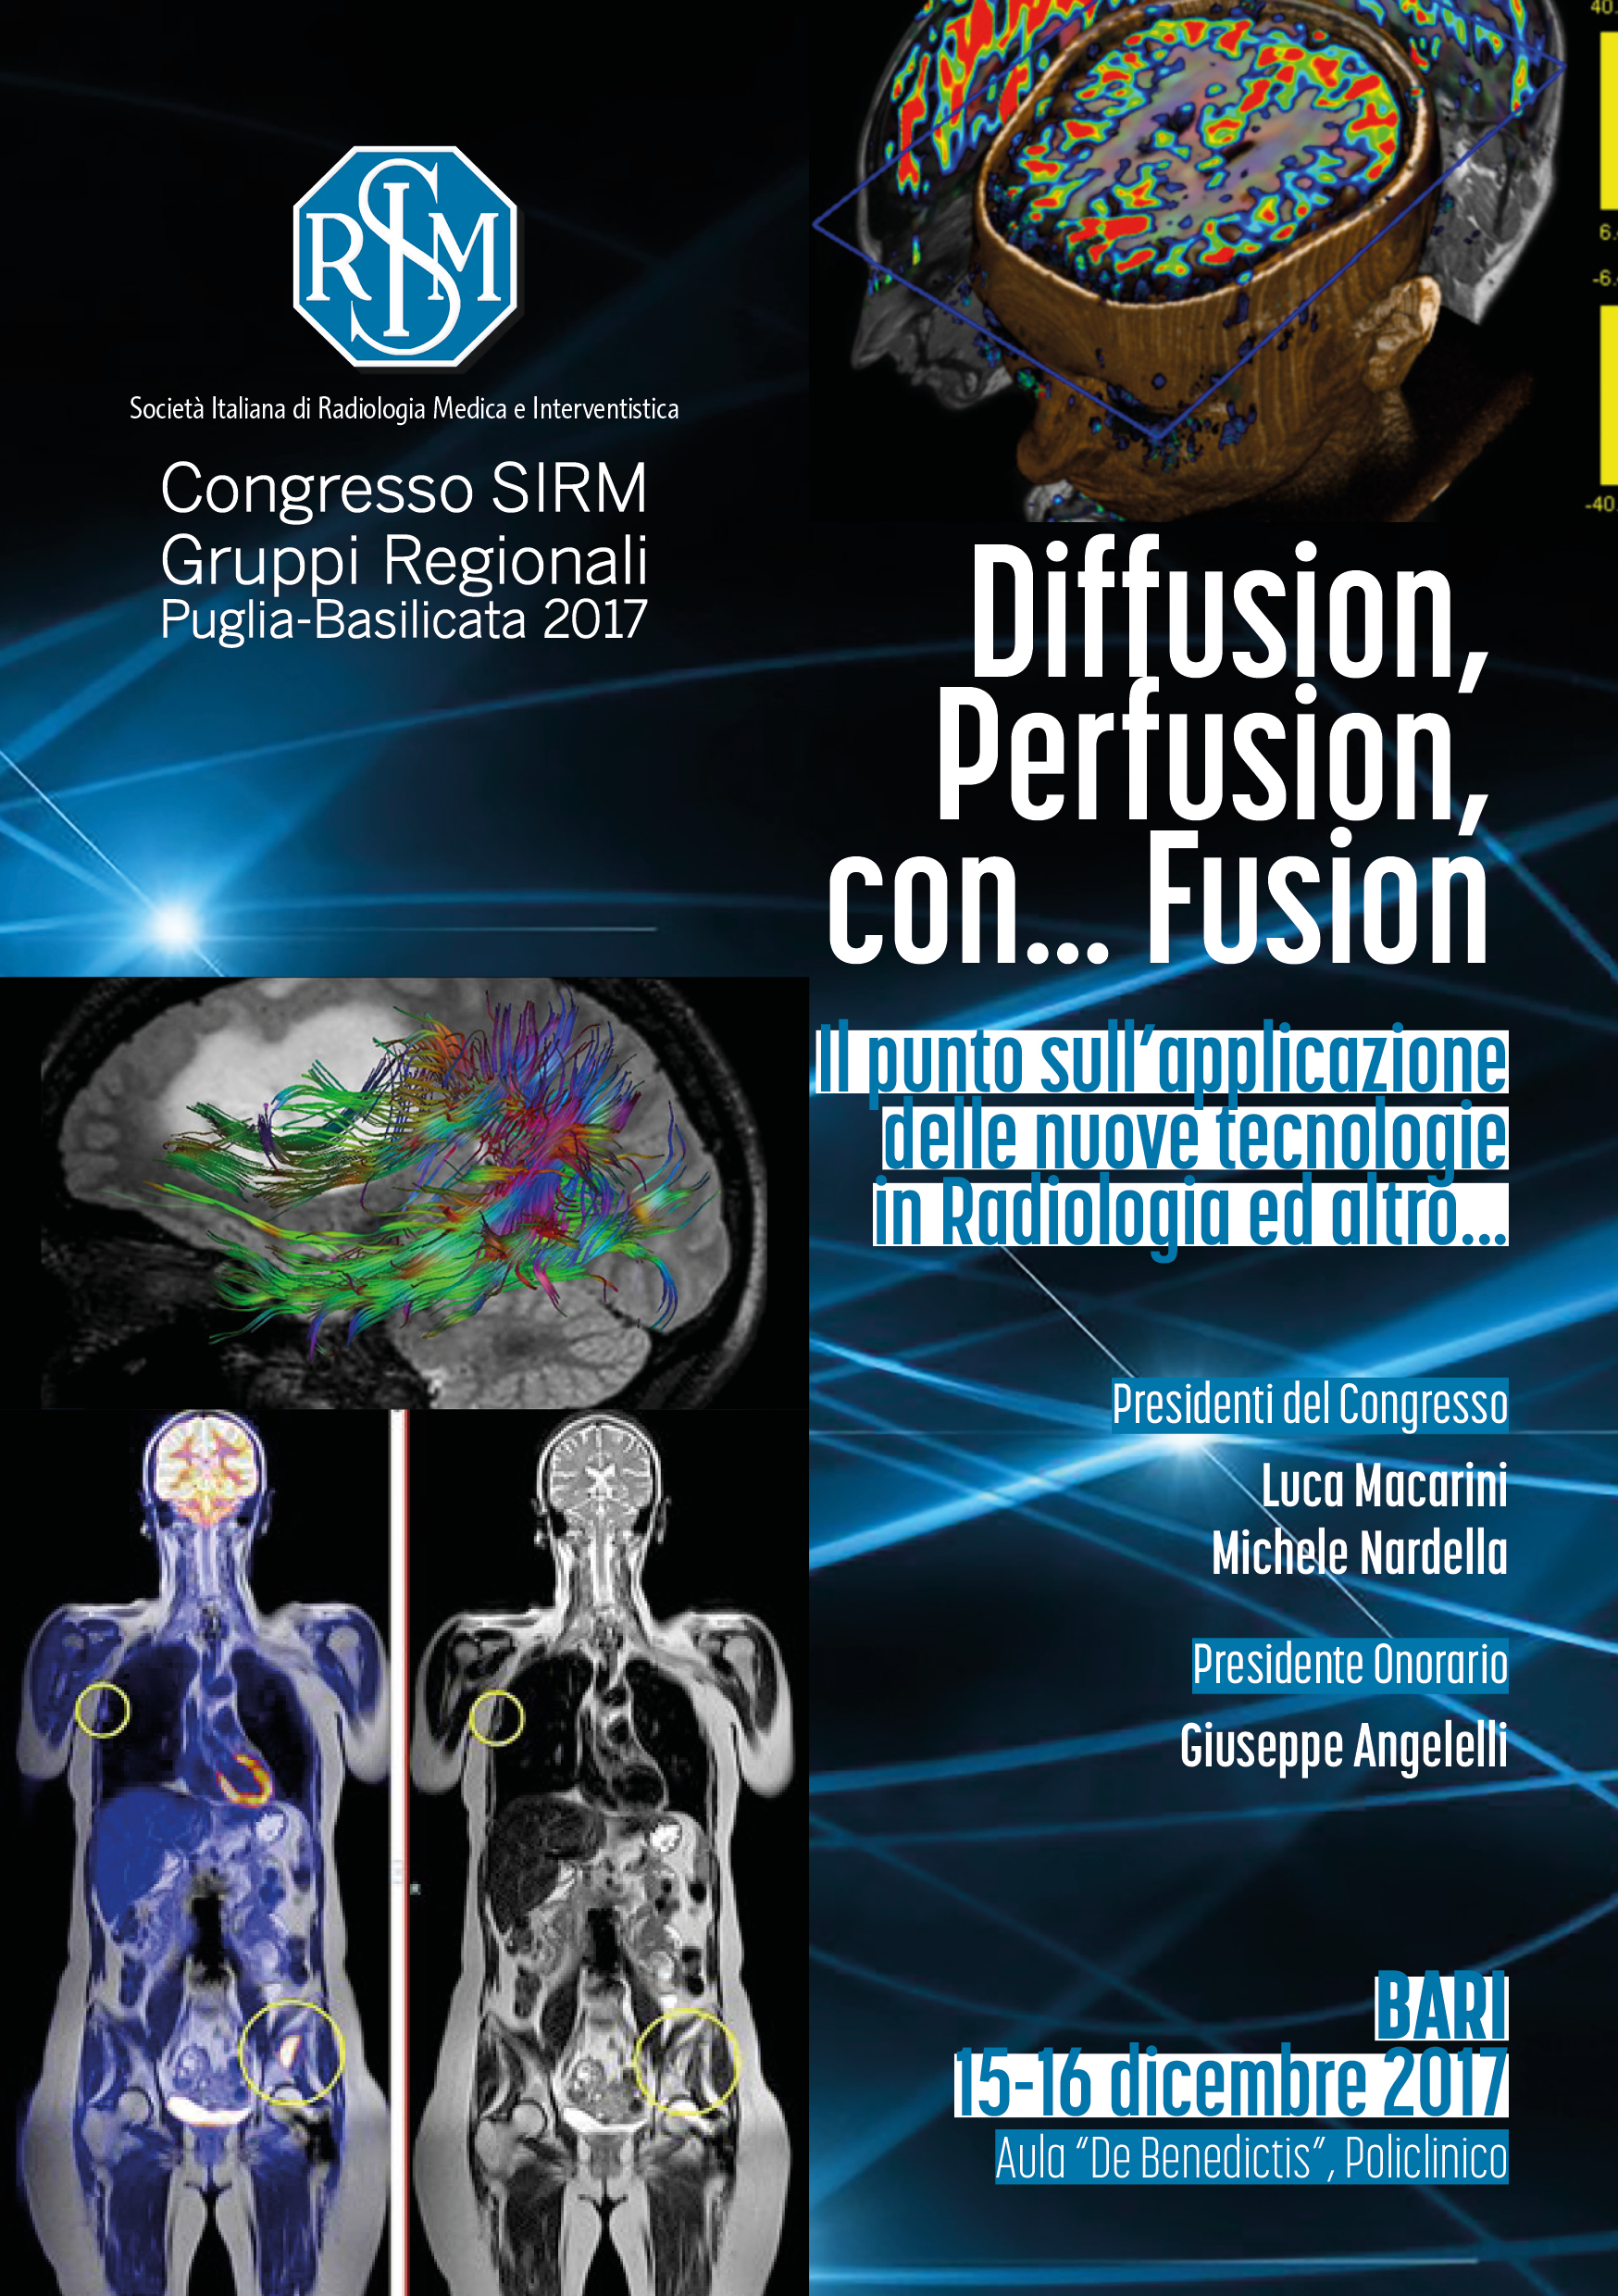 Radiologia SIRM 2017